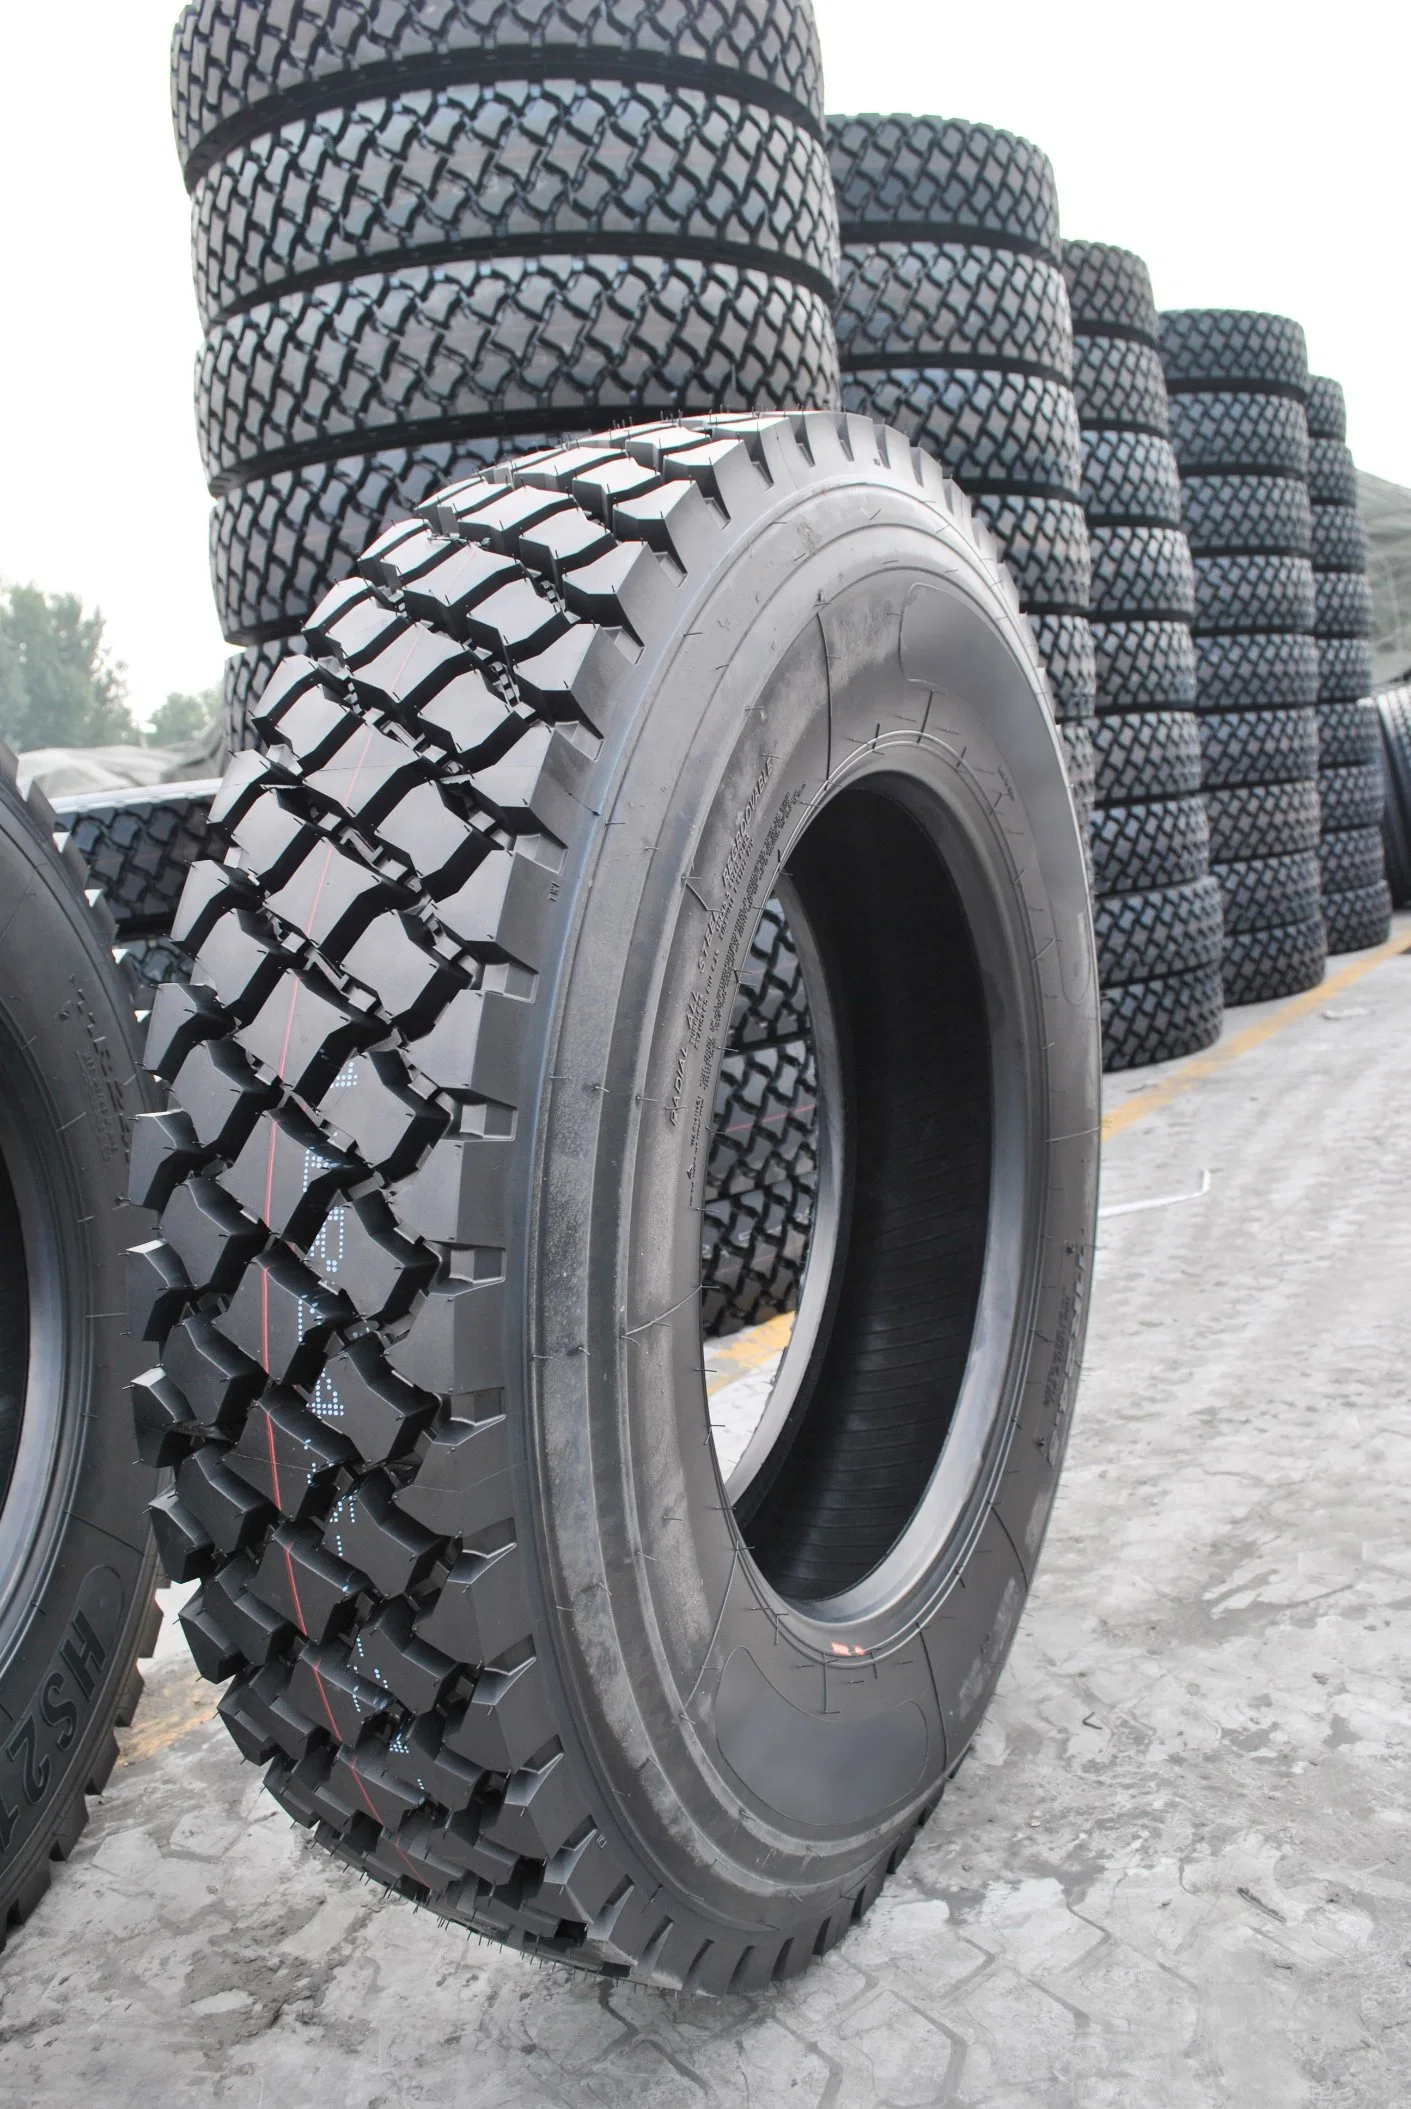 All Steel Radial Truck Tires, Bus Tires, TBR Tires, Radial Tire (11R22.5 11R24.5 295/75R22.5 385/65R22.5 425/65R22.5)